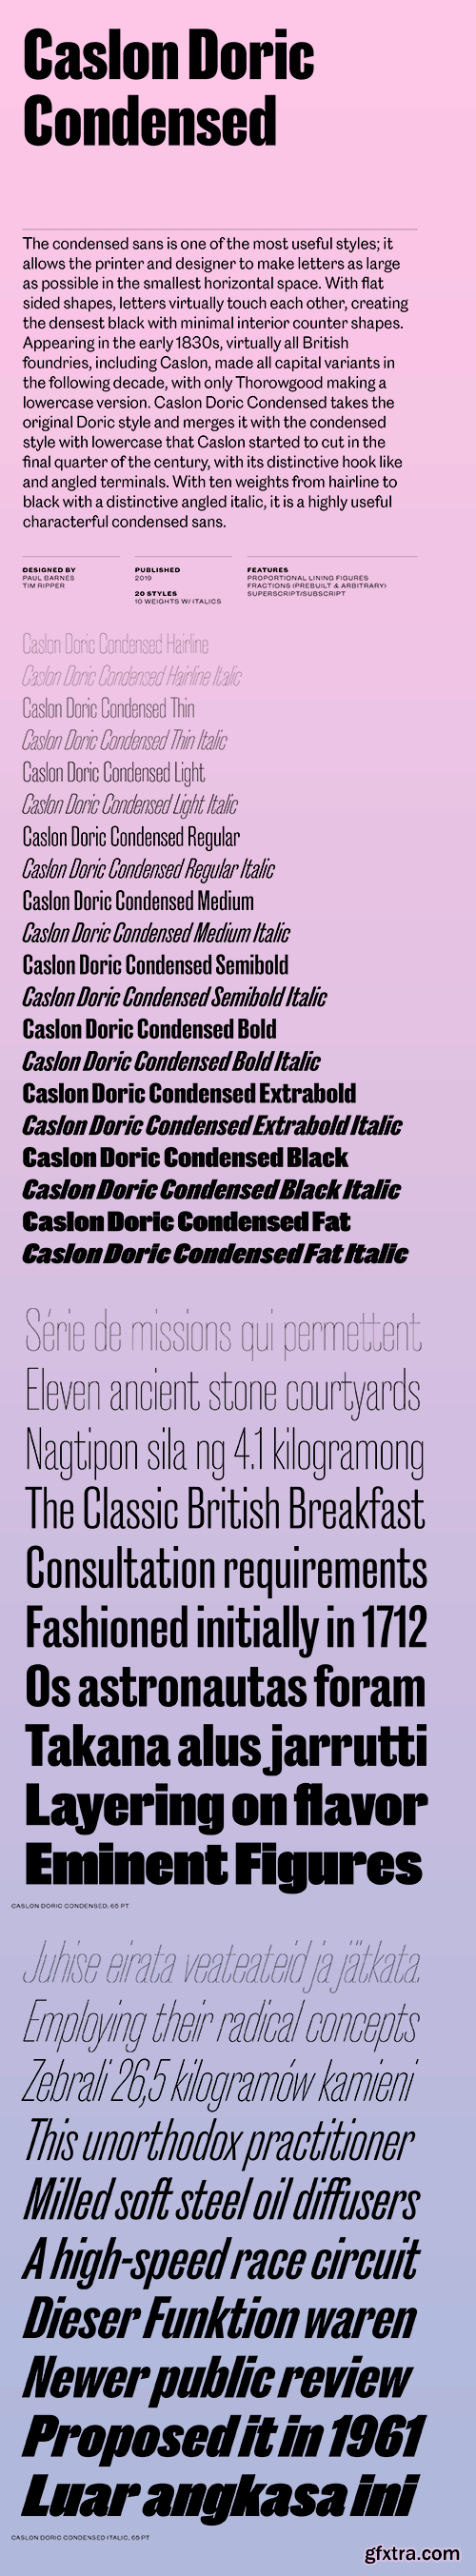 Caslon Doric Condensed Font Family